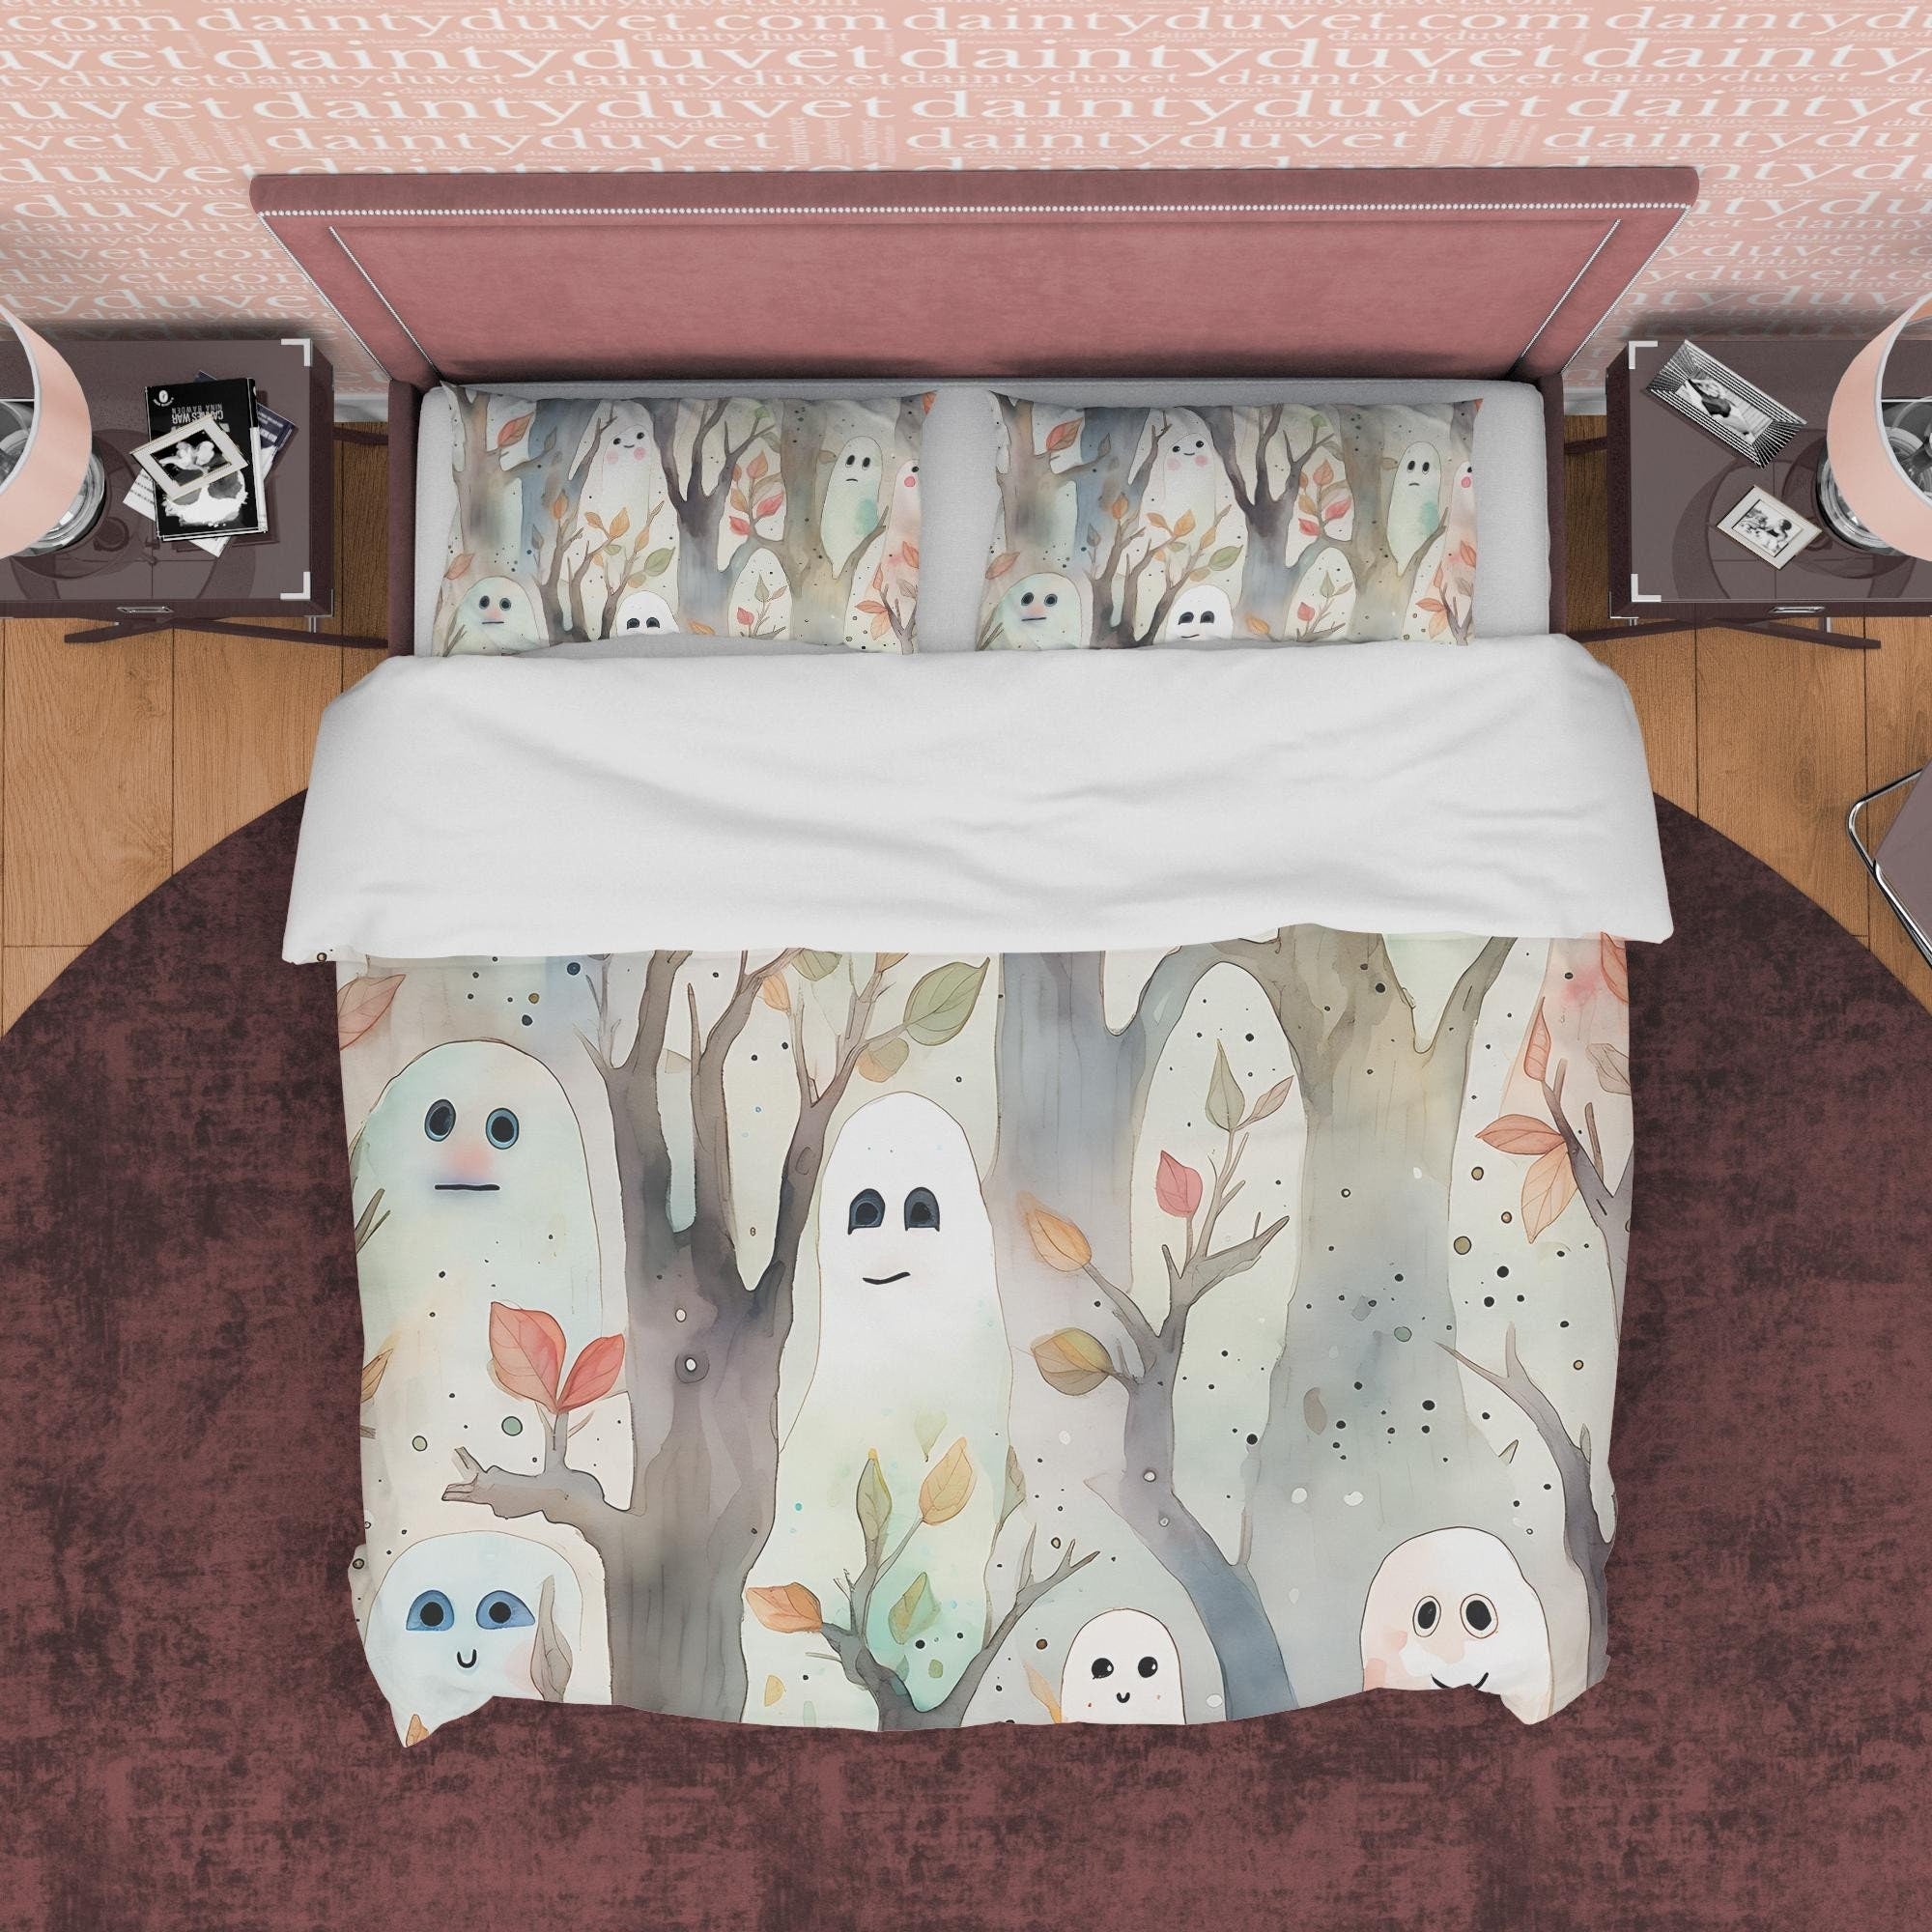 Funny Ghost Duvet Cover Set, Enchanted Forest Aesthetic Zipper Bedding, Halloween Room Decor, White Blanket Cover, Child Bedroom Quilt Cover